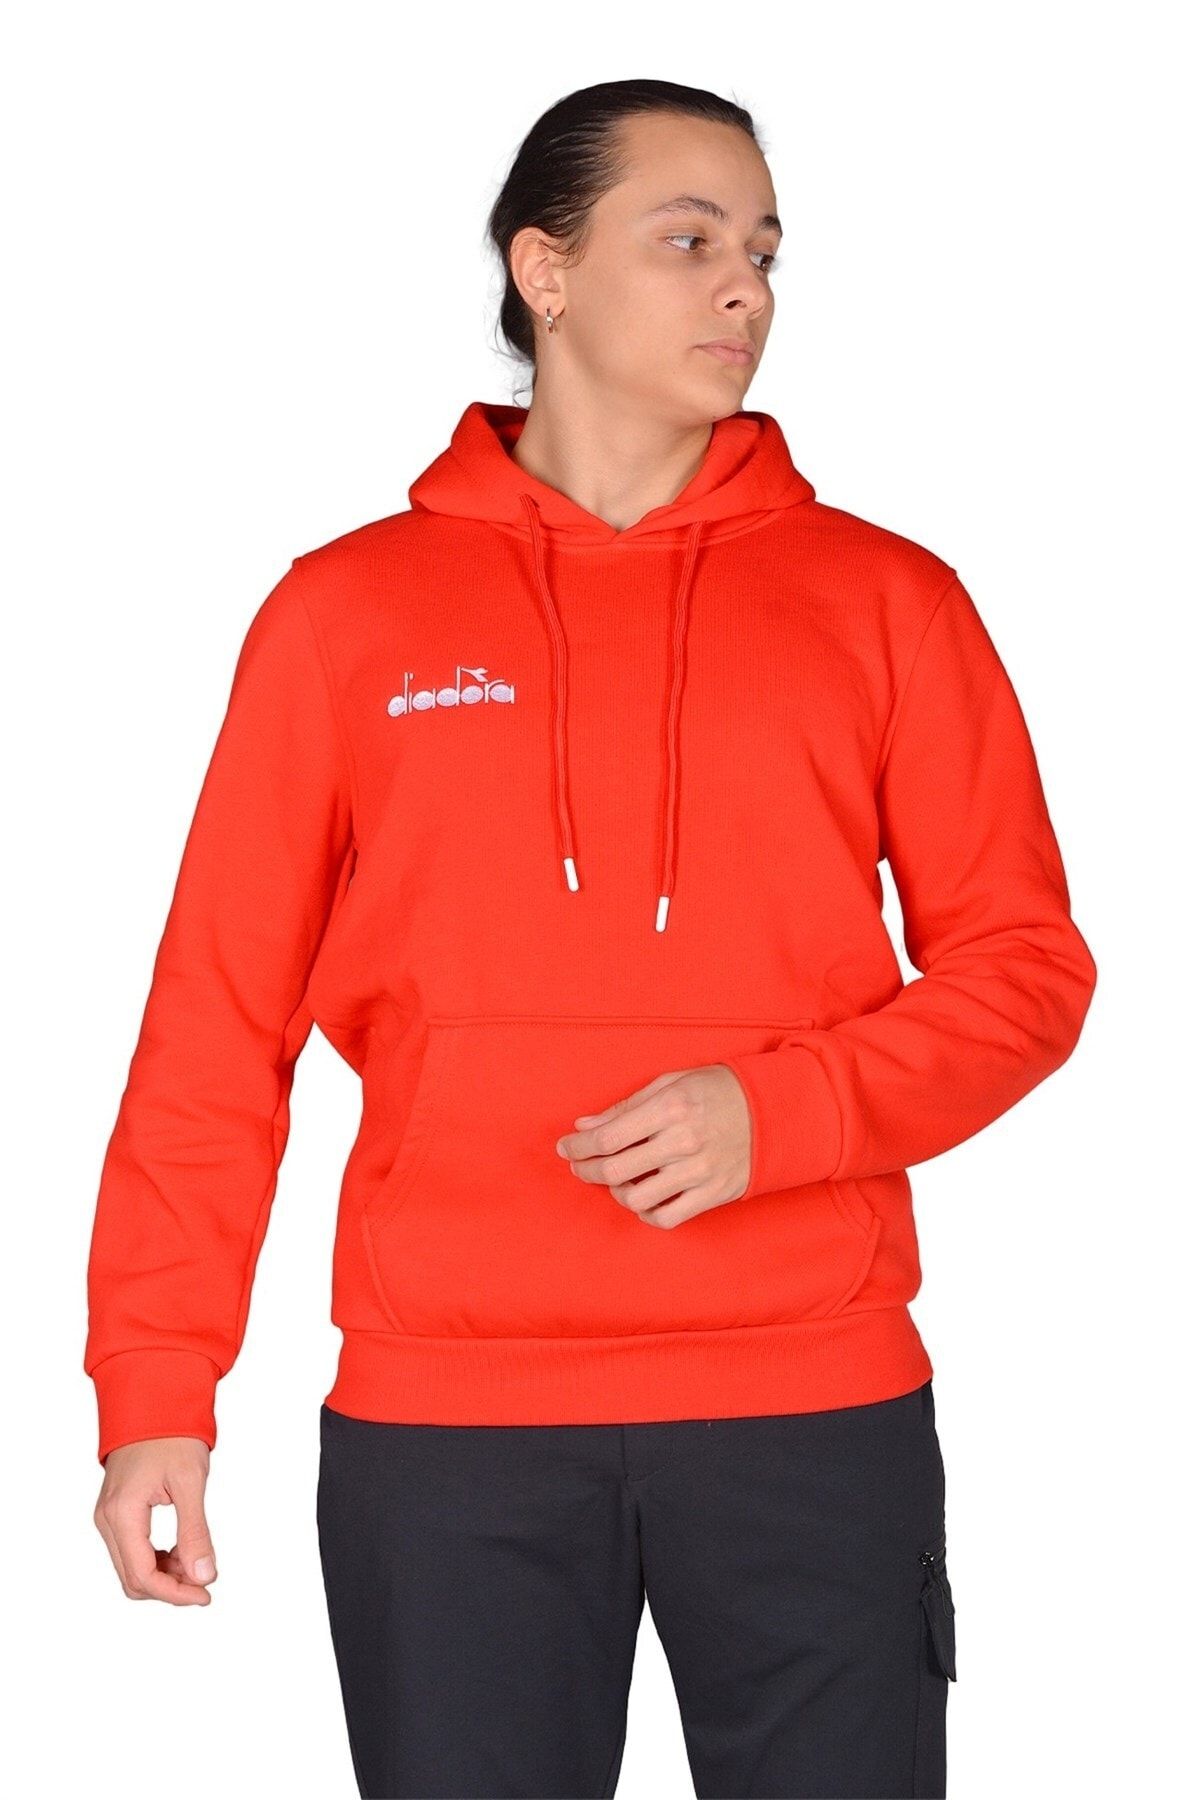 Diadora Bergamo - Erkek Kırmızı Pamuklu Spor Sweatshirt - Ddber1030016